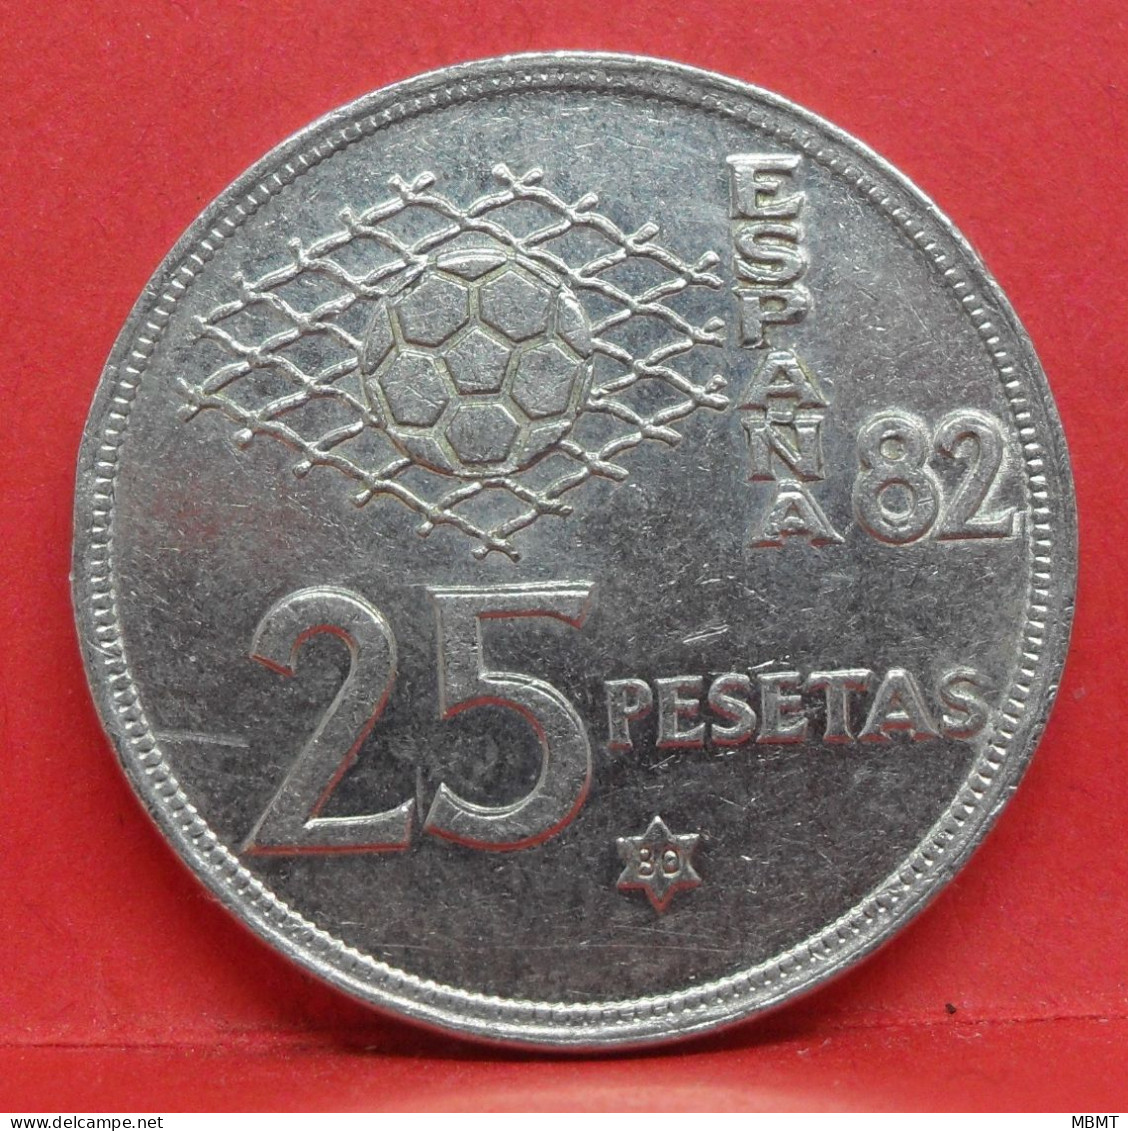 25 Pesetas 1980 étoile 80 - TTB - Pièce Monnaie Espagne - Article N°2453 - 25 Pesetas